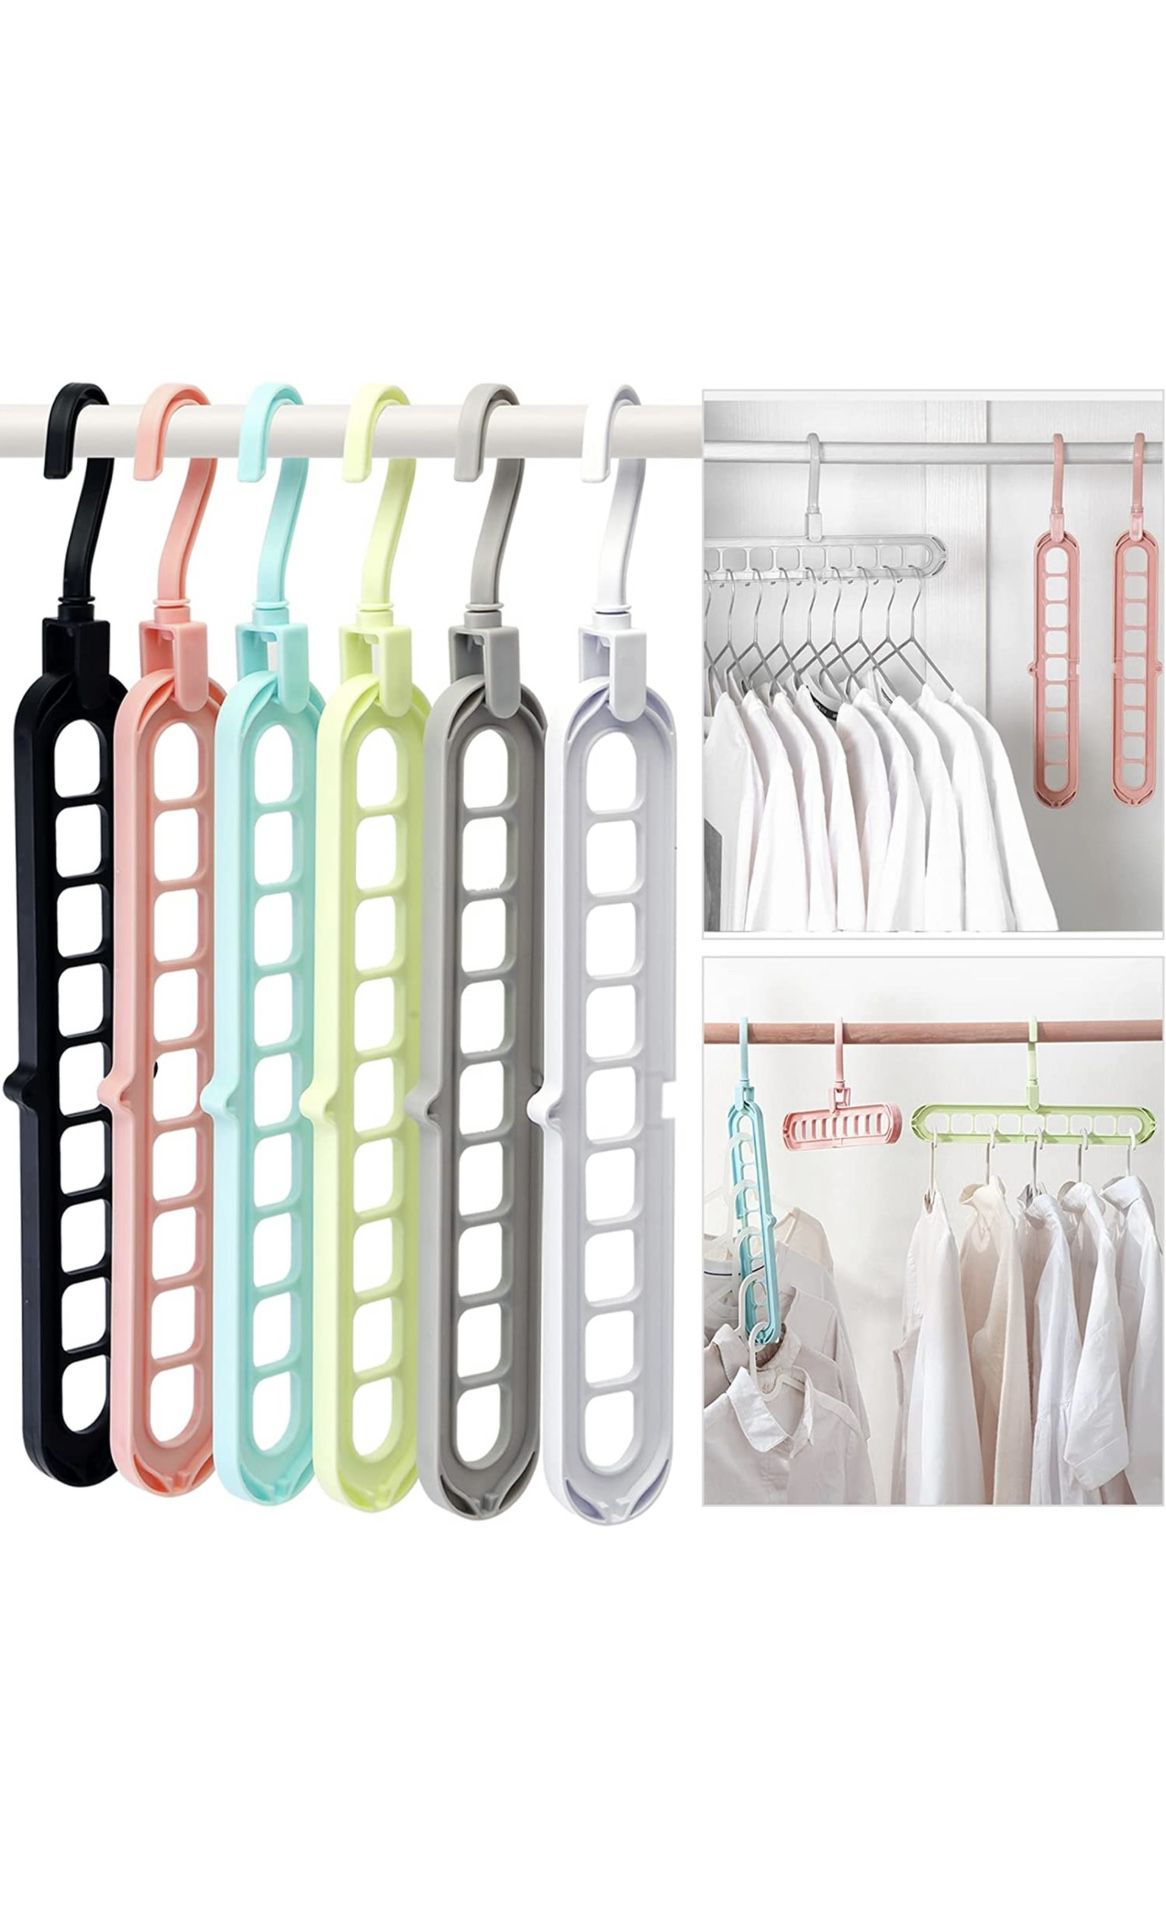 6 Closet Organization Hangers